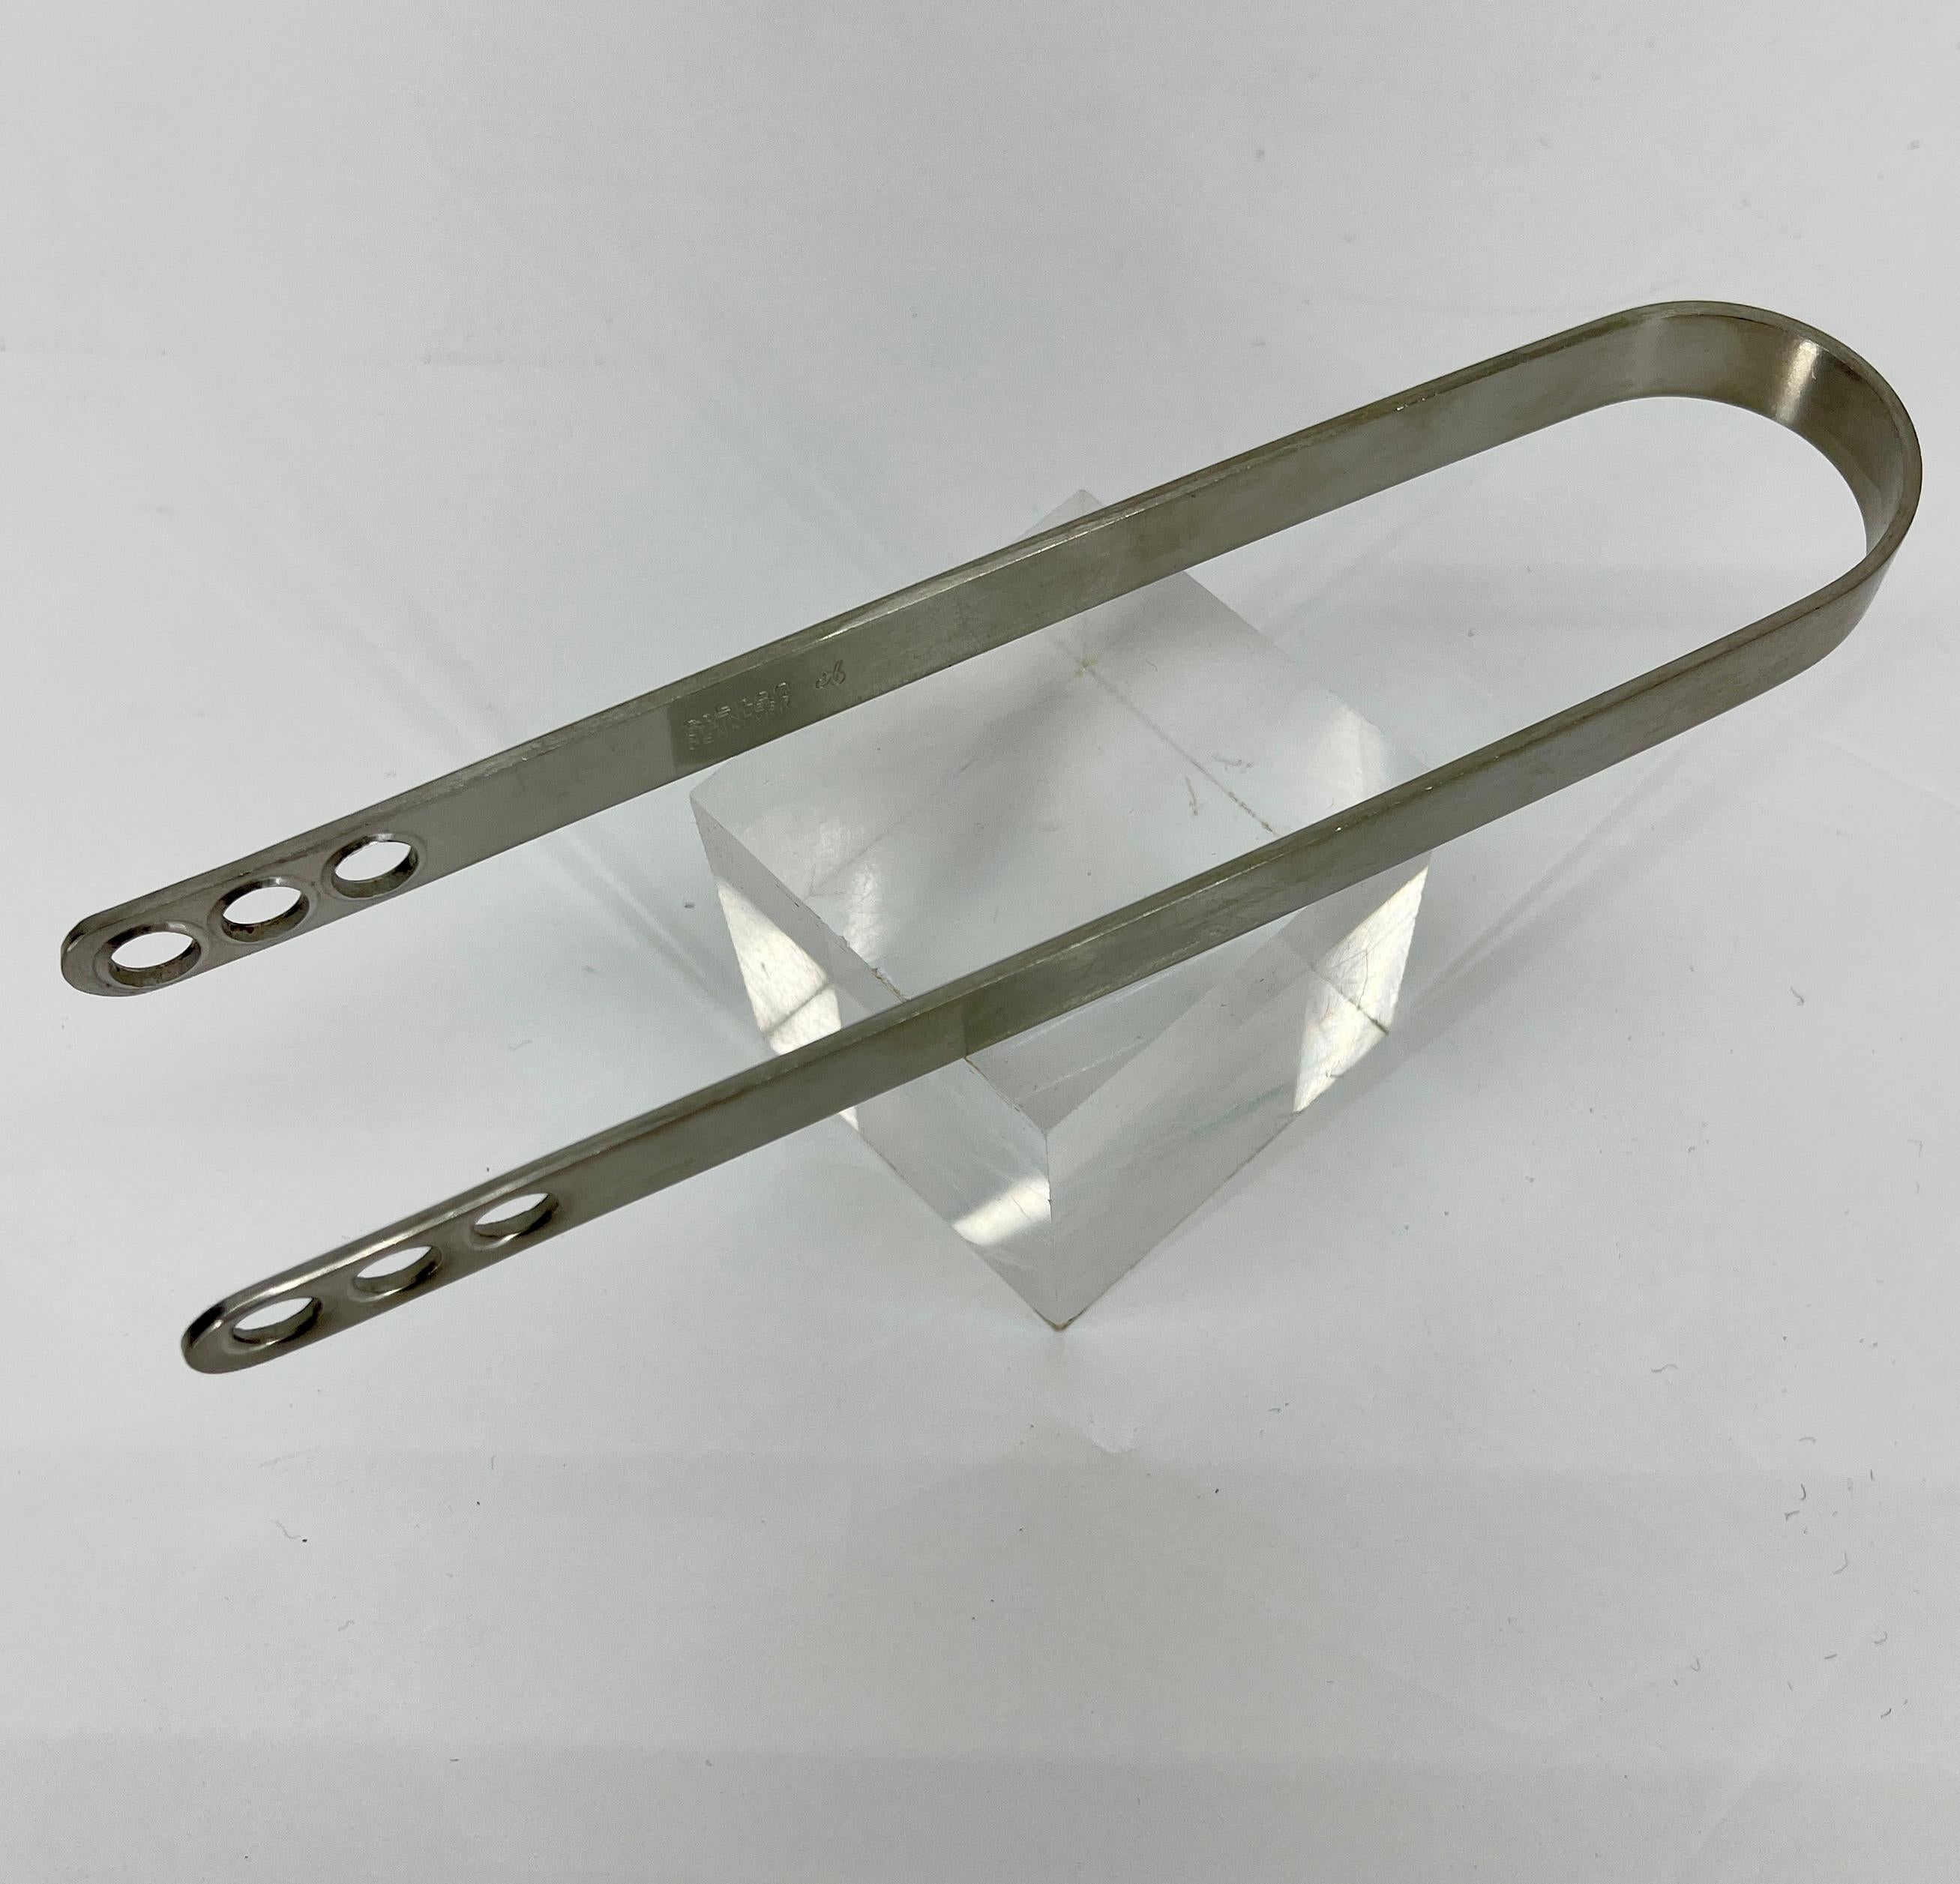 Brushed Arne Jacobsen for Stelton Stainless Steel Ice Tong, Danish Mid-Century Modern